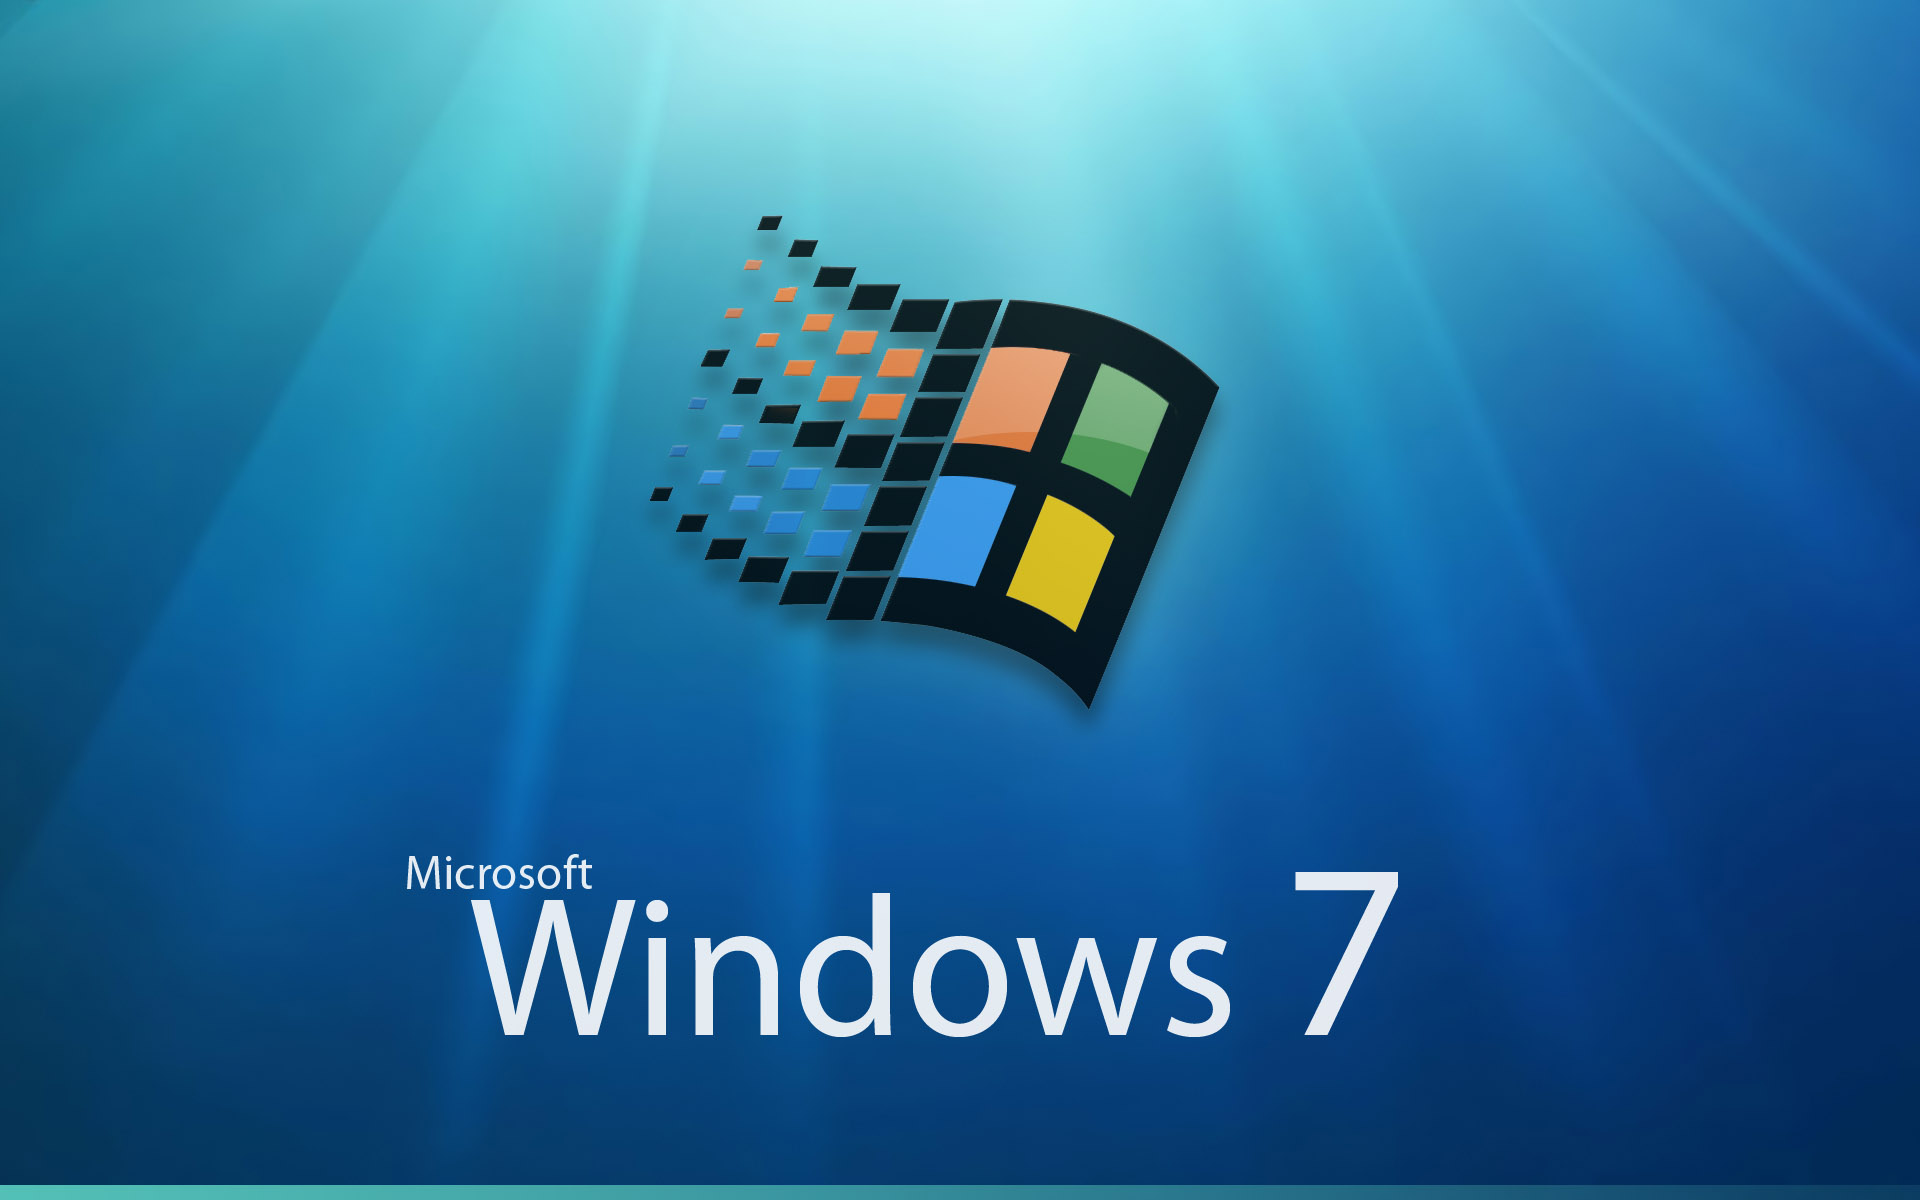 Microsoft Windows Logo Desktop Wallpaper Pictures